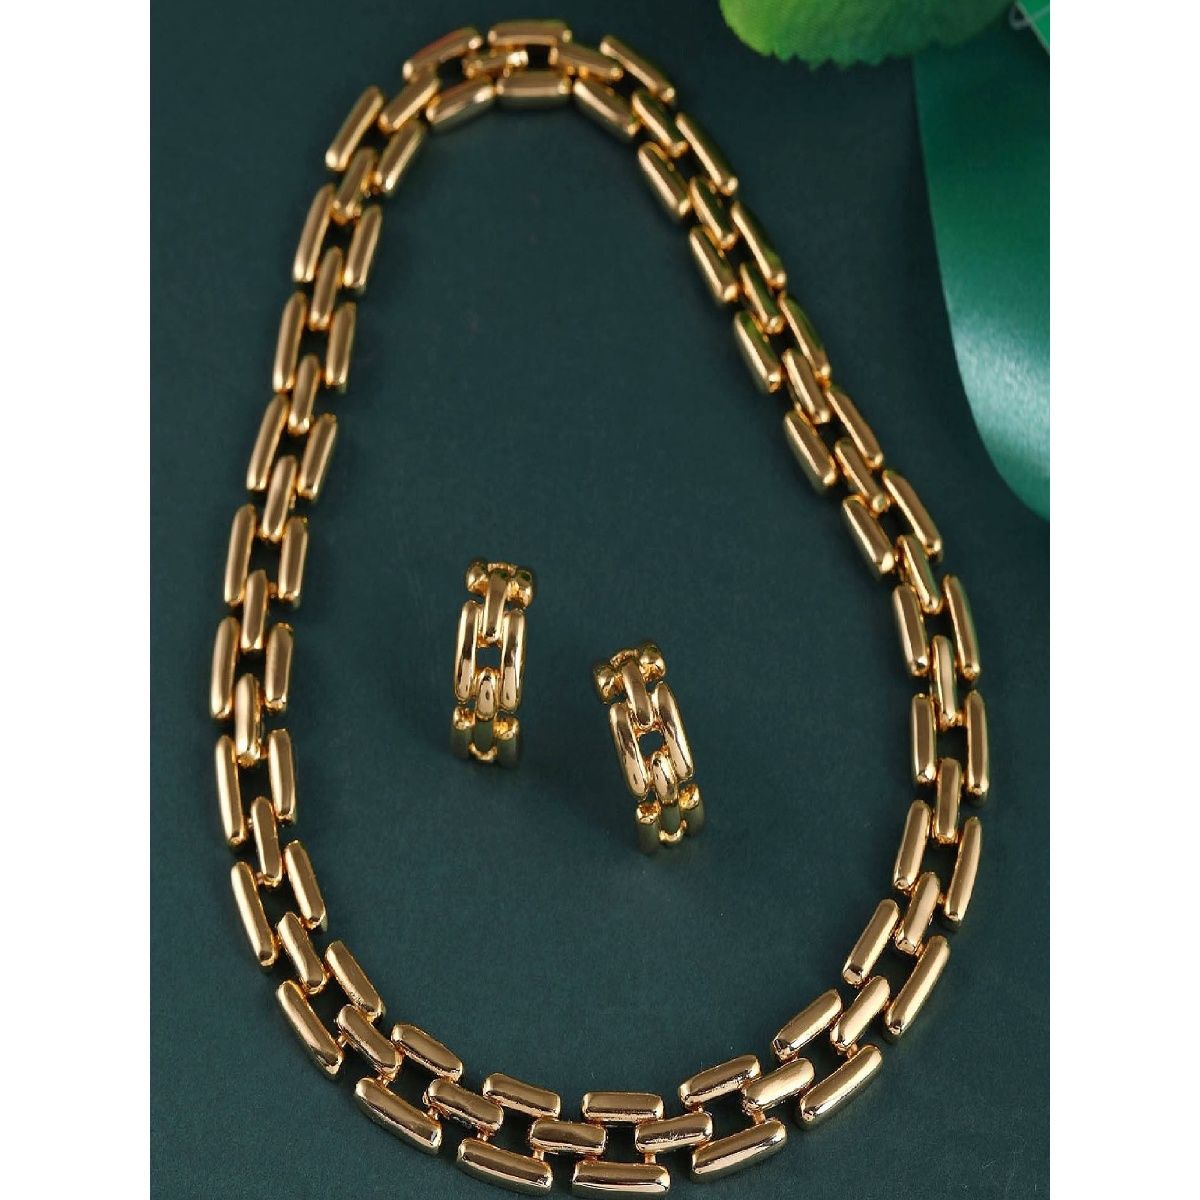 Showroom of 22kt real solid yellow gold hallmark necklace interlink men's  chain 60 grams | Jewelxy - 212495